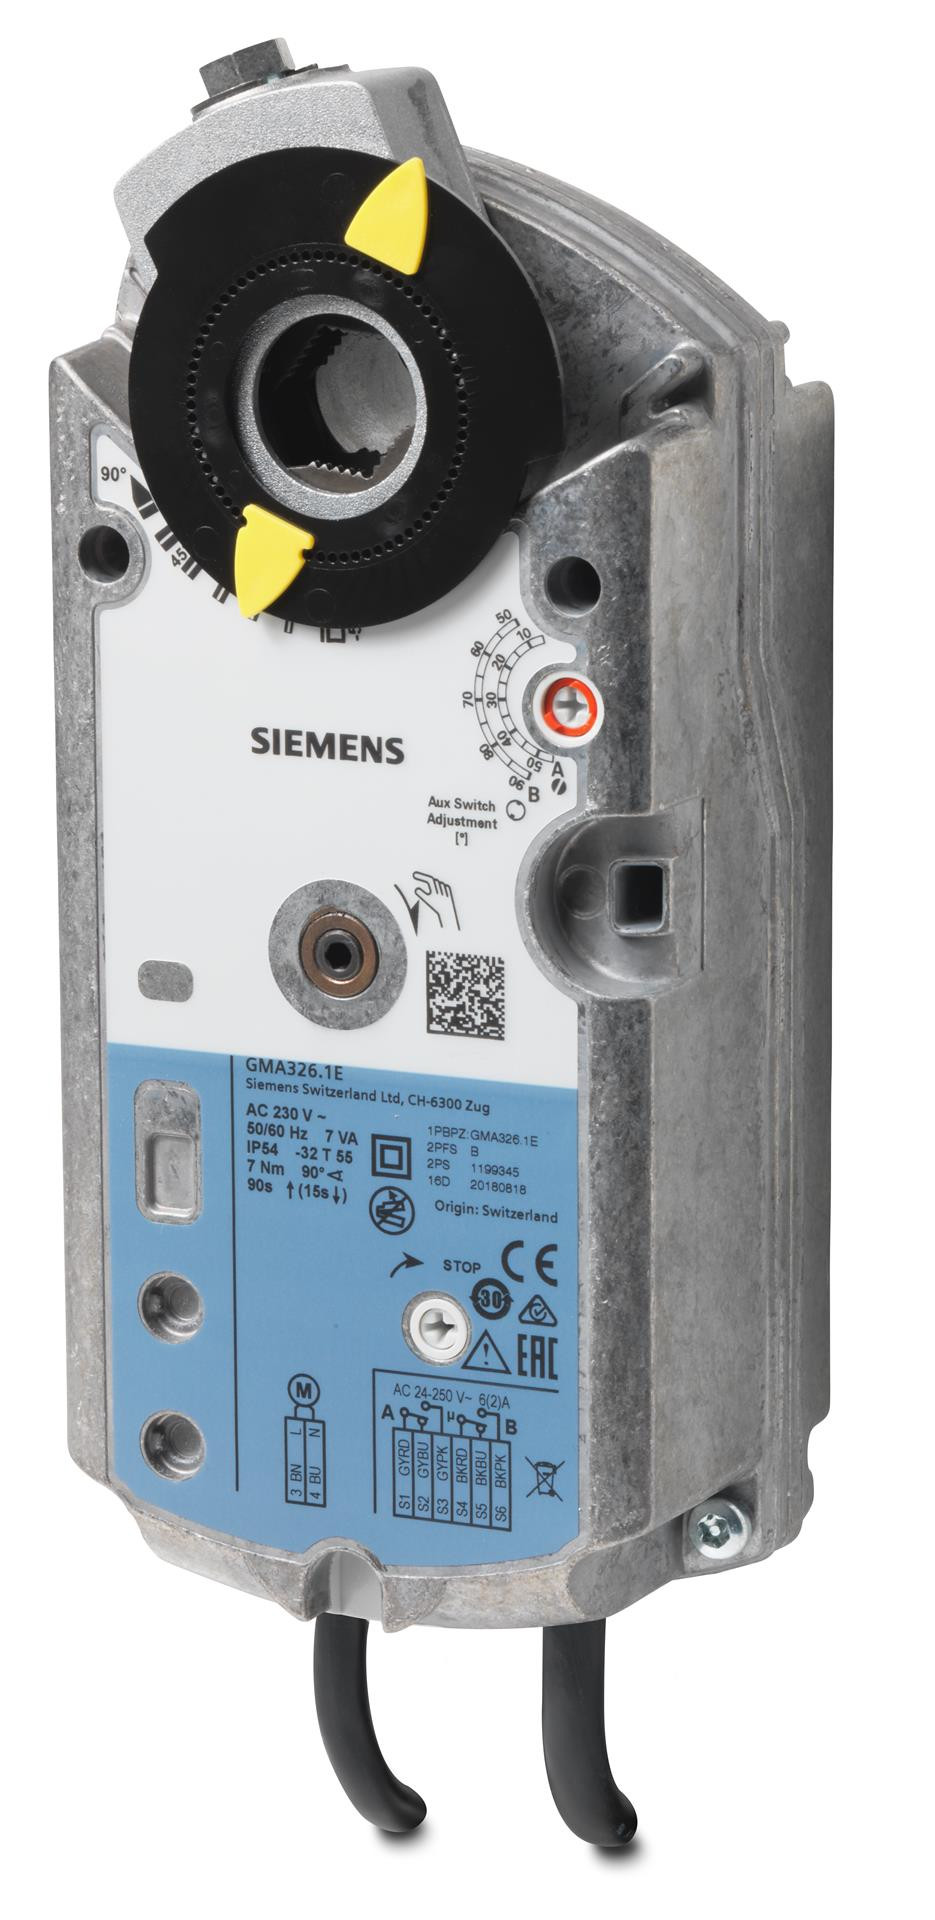 Siemens Luftklappen-Drehantrieb, AC 230 V, 2-Punkt, 7 Nm, Federrücklauf 90/15 s, 2 Hilfsschalter GMA326.1E